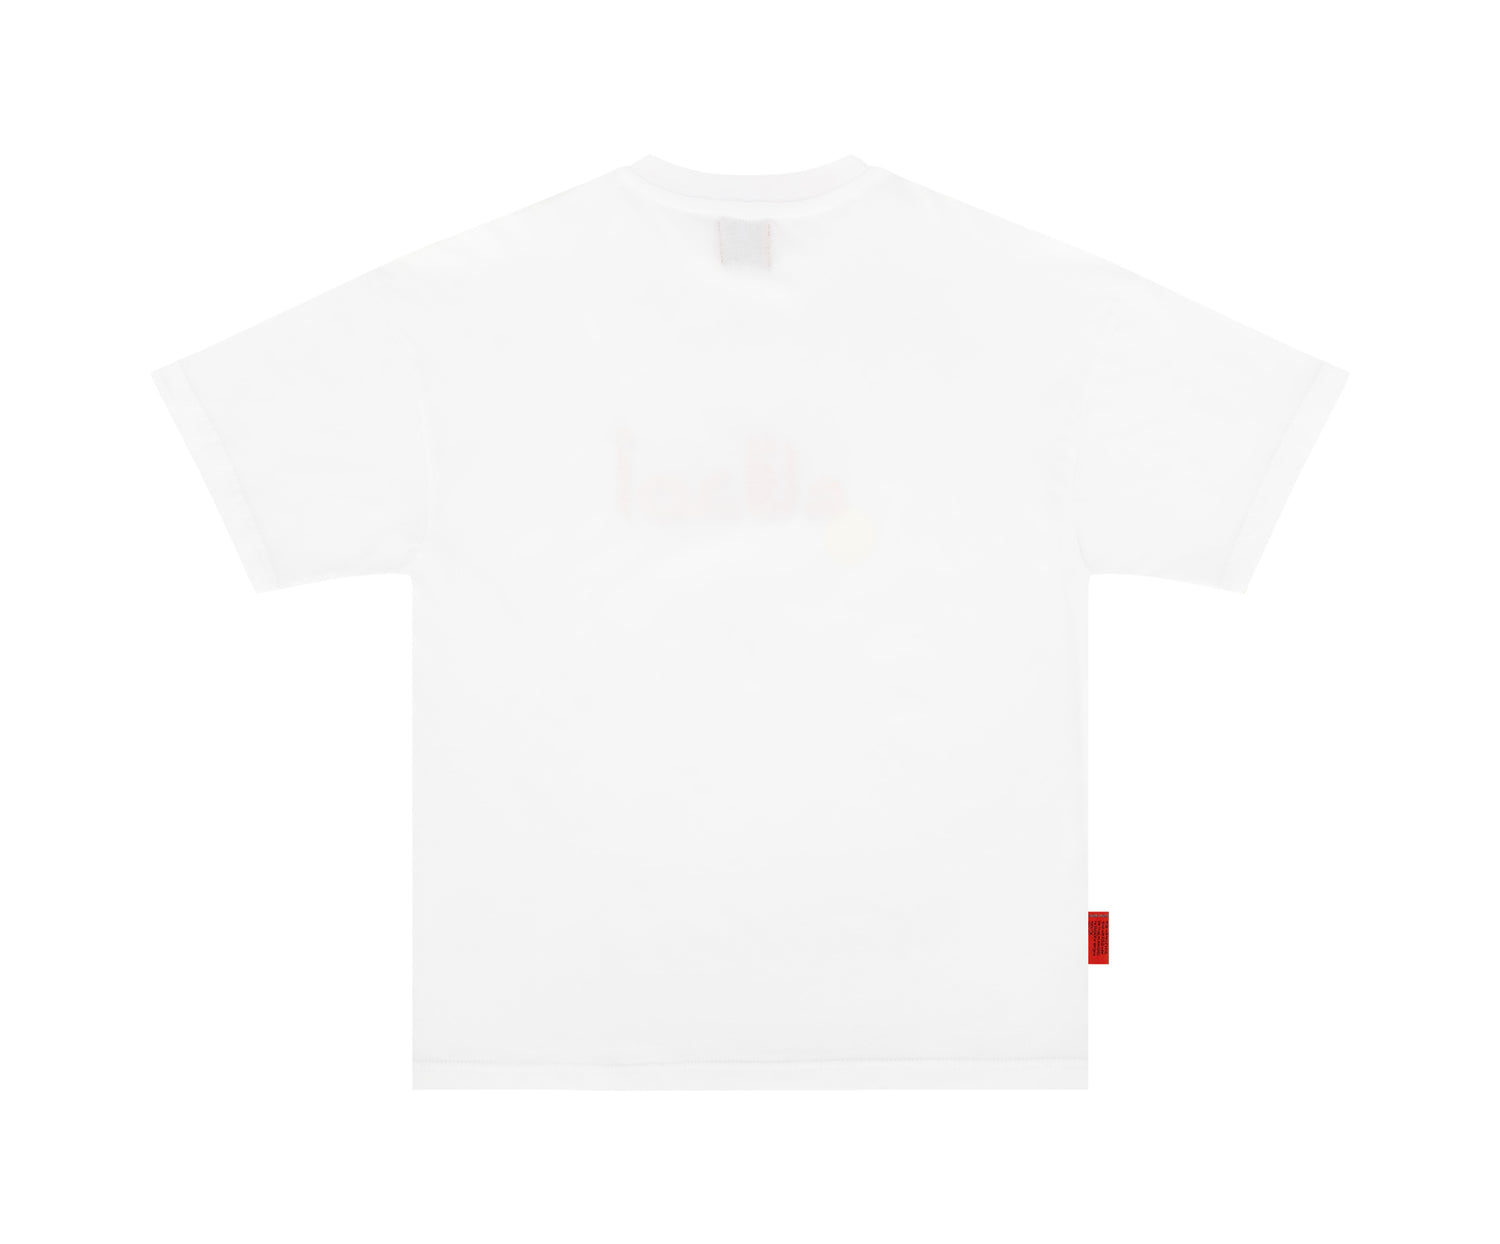 (Arabic) T-shirt White